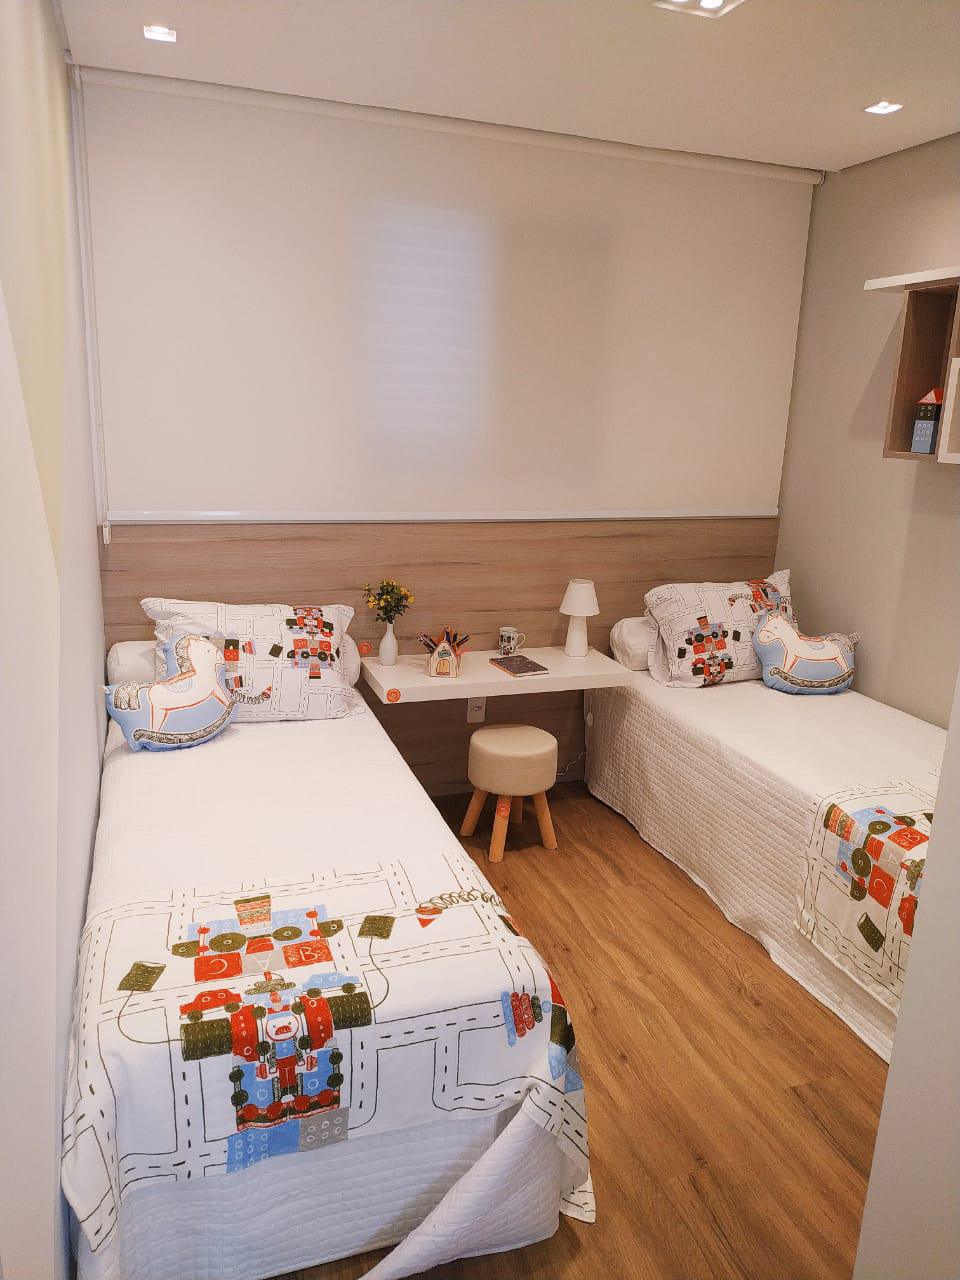 Apartamento em Sumare - Gran Vic Barcelona - Investe Imovel